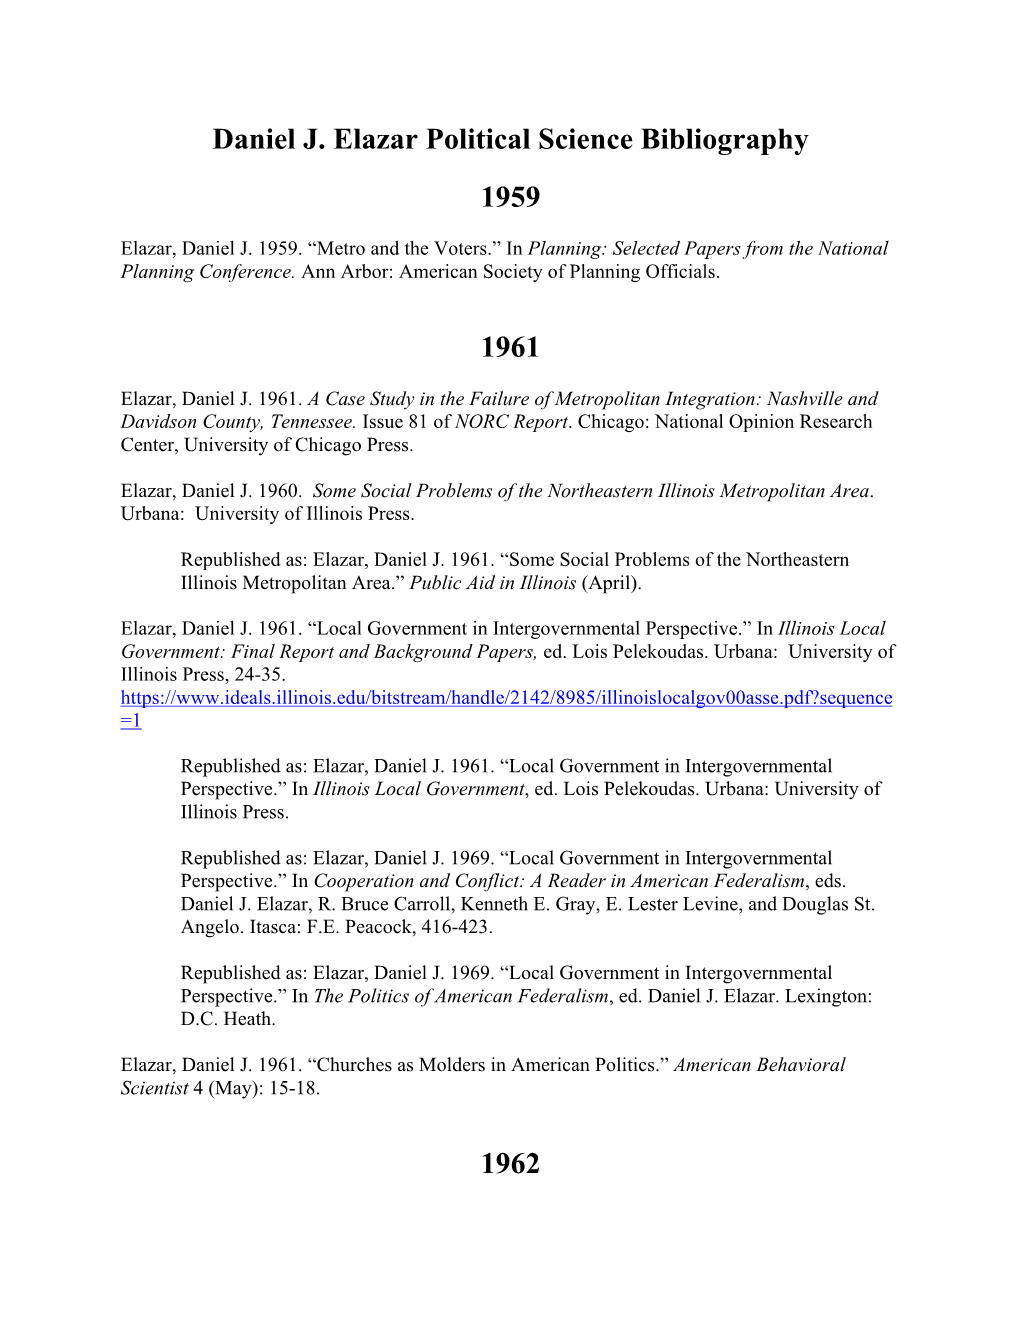 Daniel J. Elazar Complete Political Science Bibliography